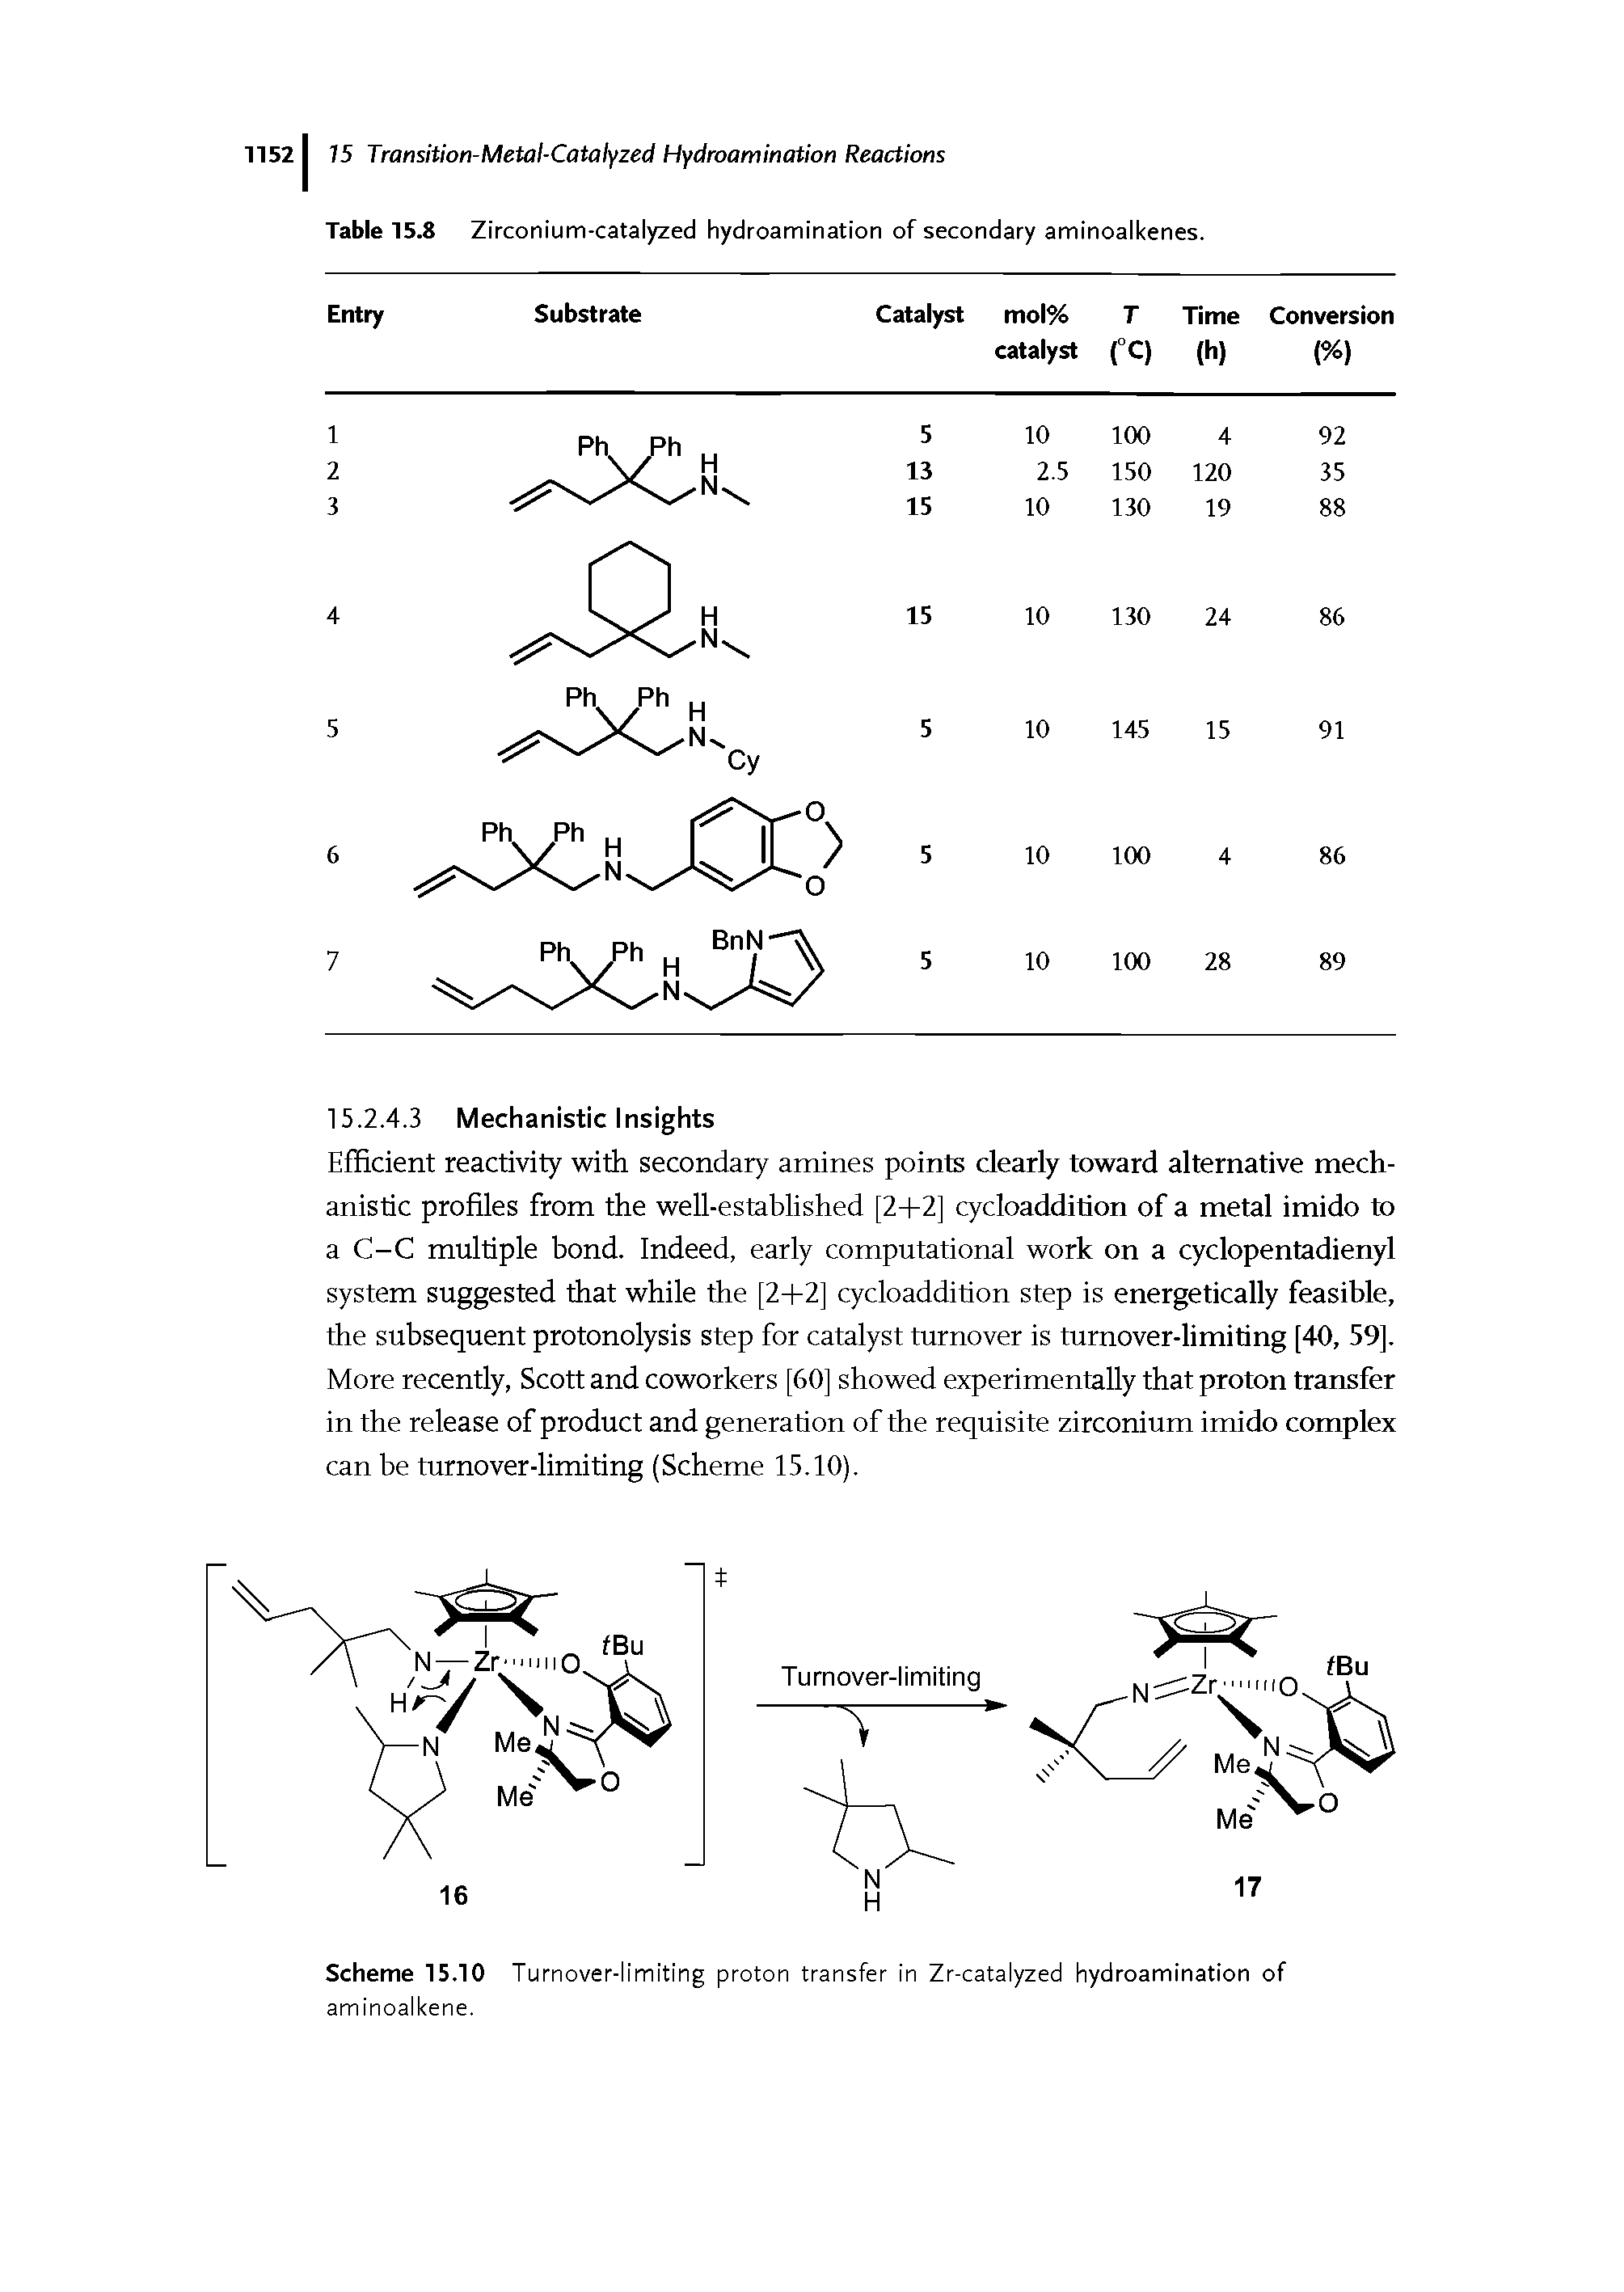 Table 15 Zirconium-catalyzed hydroamination of secondary aminoalkenes.